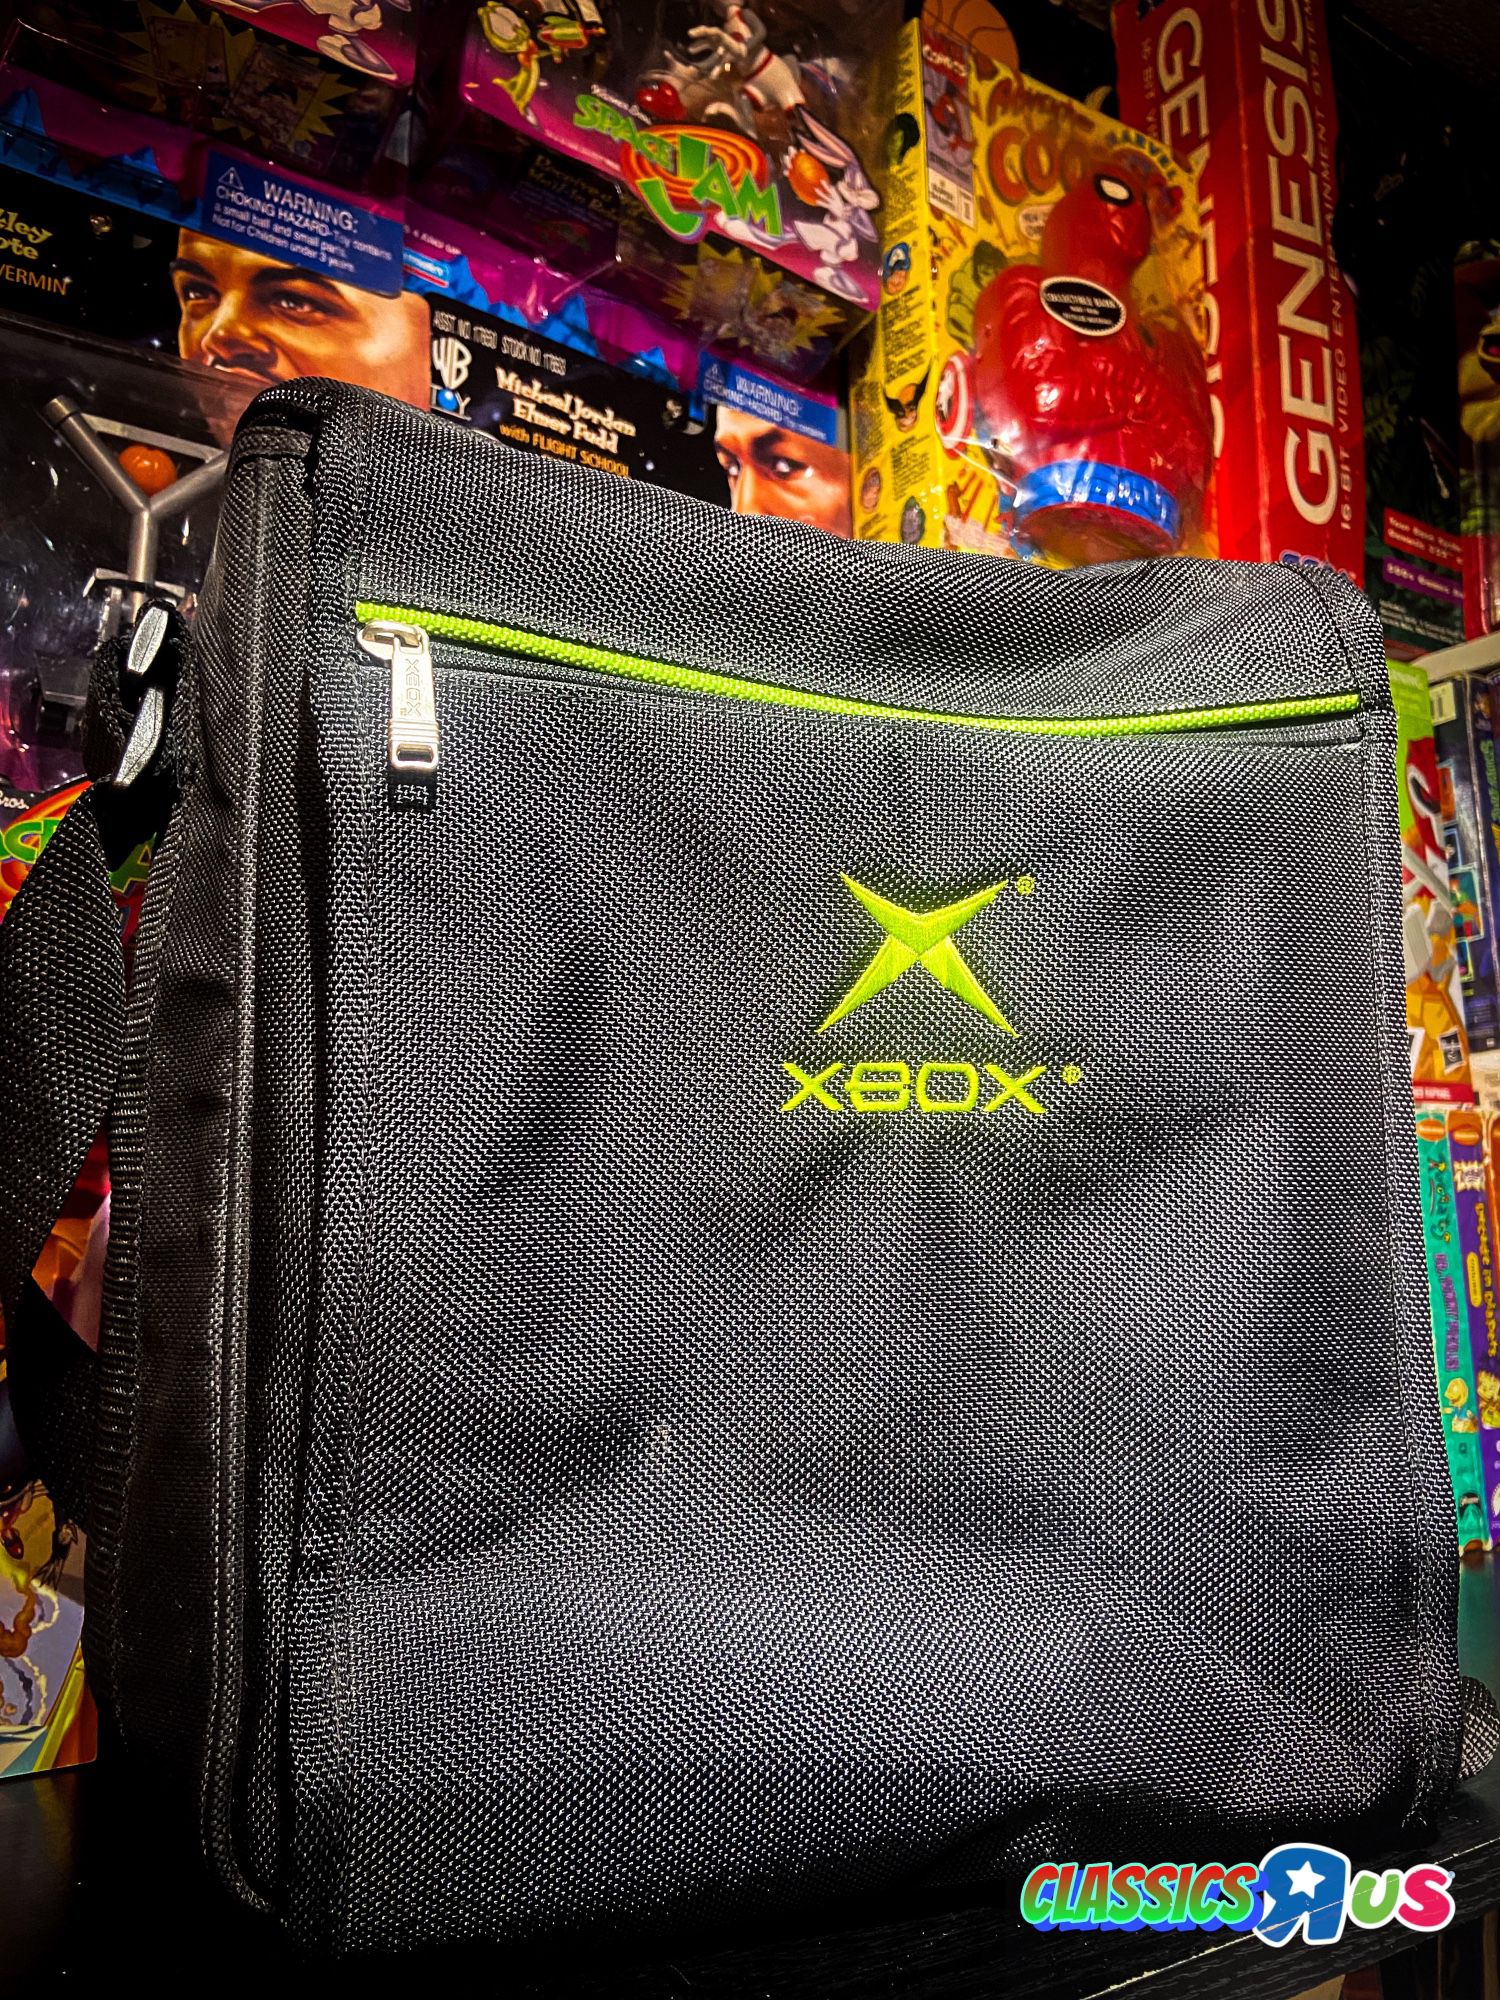 Microsoft Xbox Console CarryCase Travel Bag Black Adjust Handle 14x11x8 